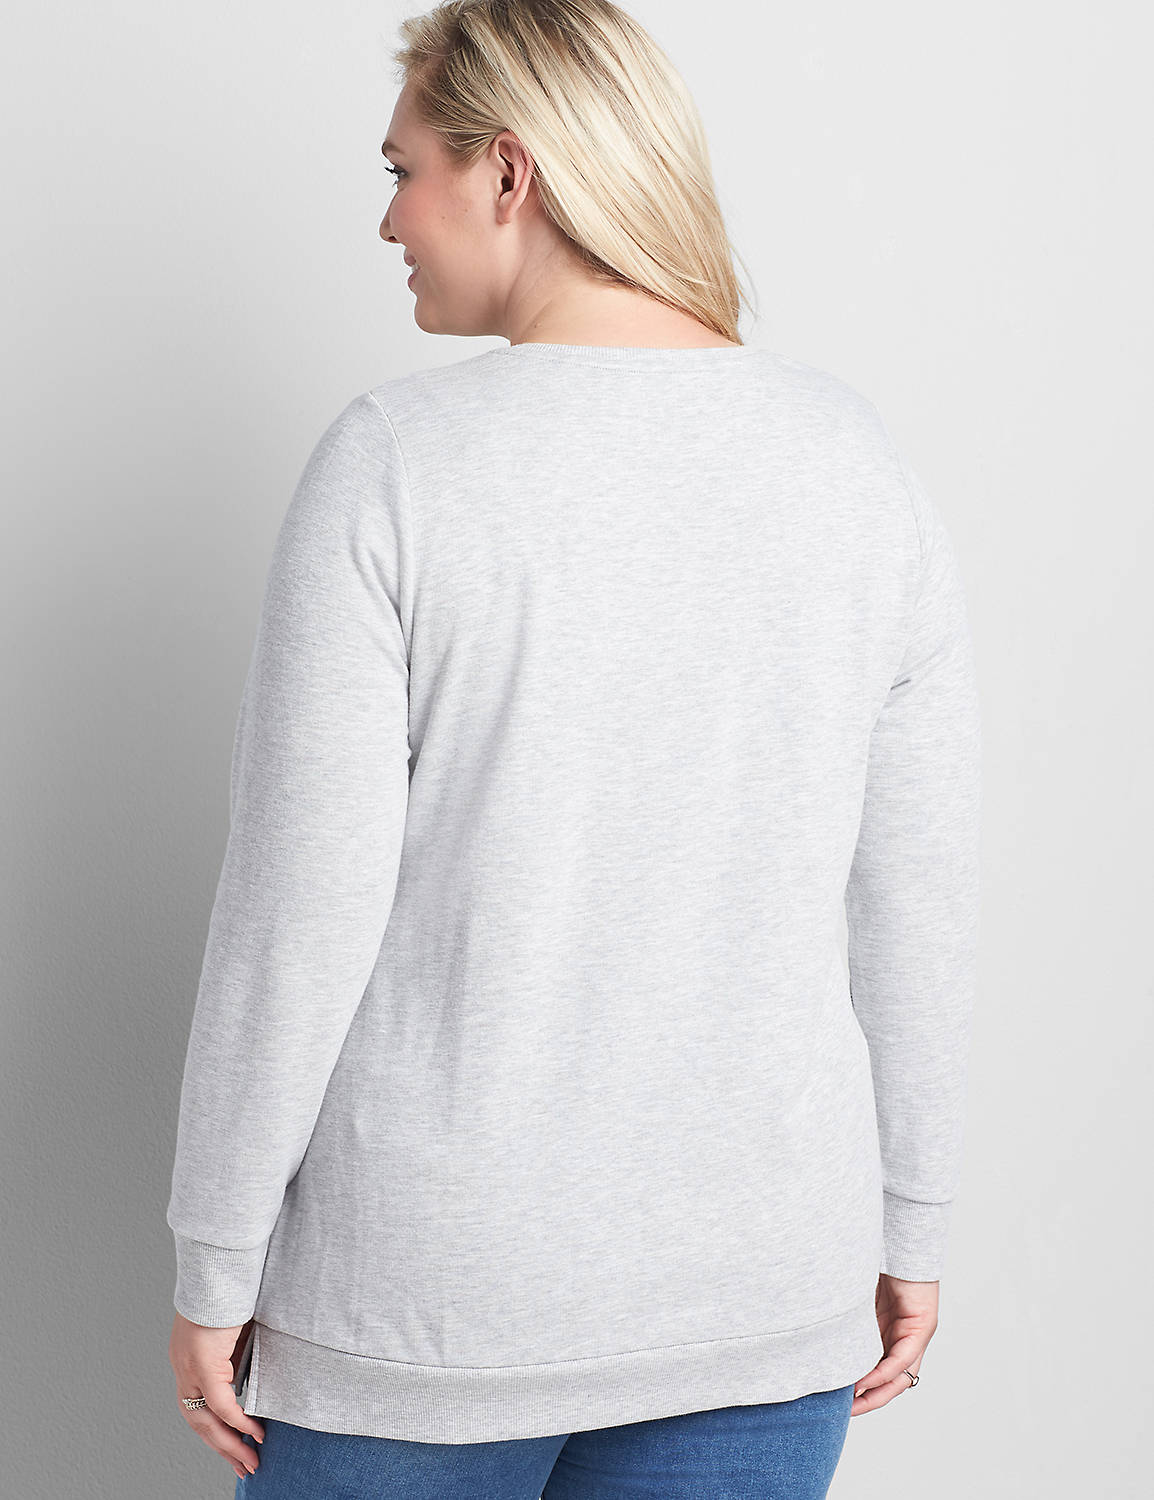 Long Sleeve Crew Neck Oversized Sweatshirt with Side Slit Graphic: Livin On A Prayer 1123049:BC04 Heather grey:10/12 Product Image 2